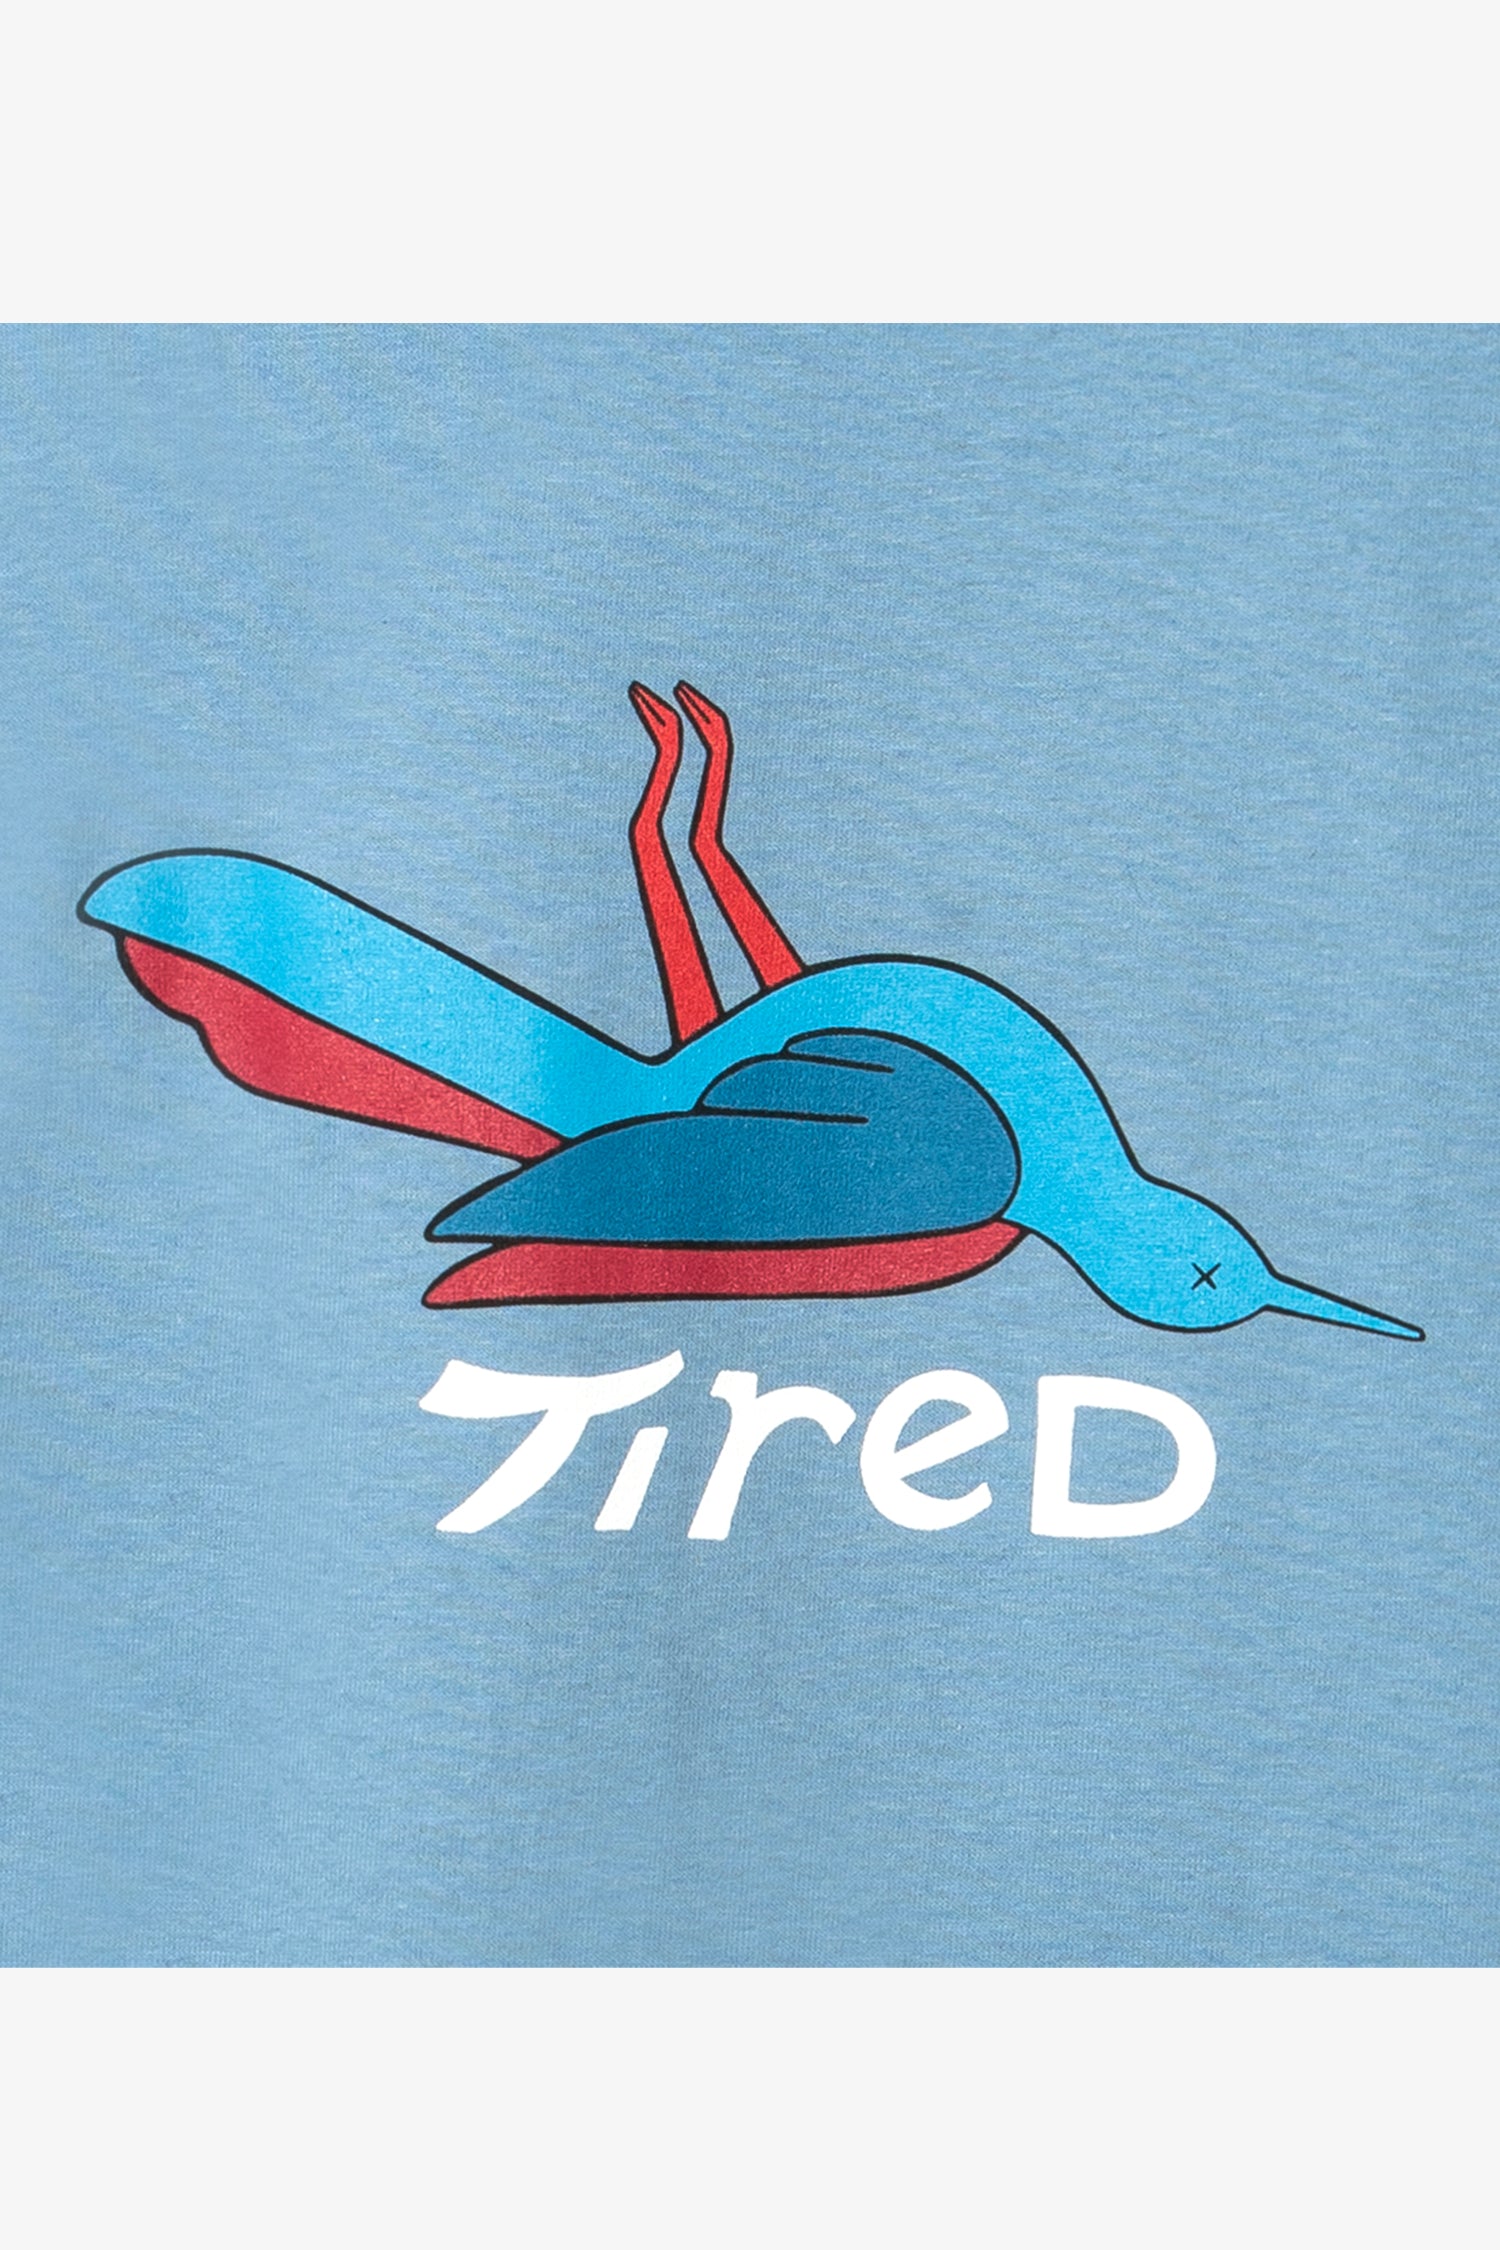 Selectshop FRAME - TIRED Bird Tee T-Shirts Dubai